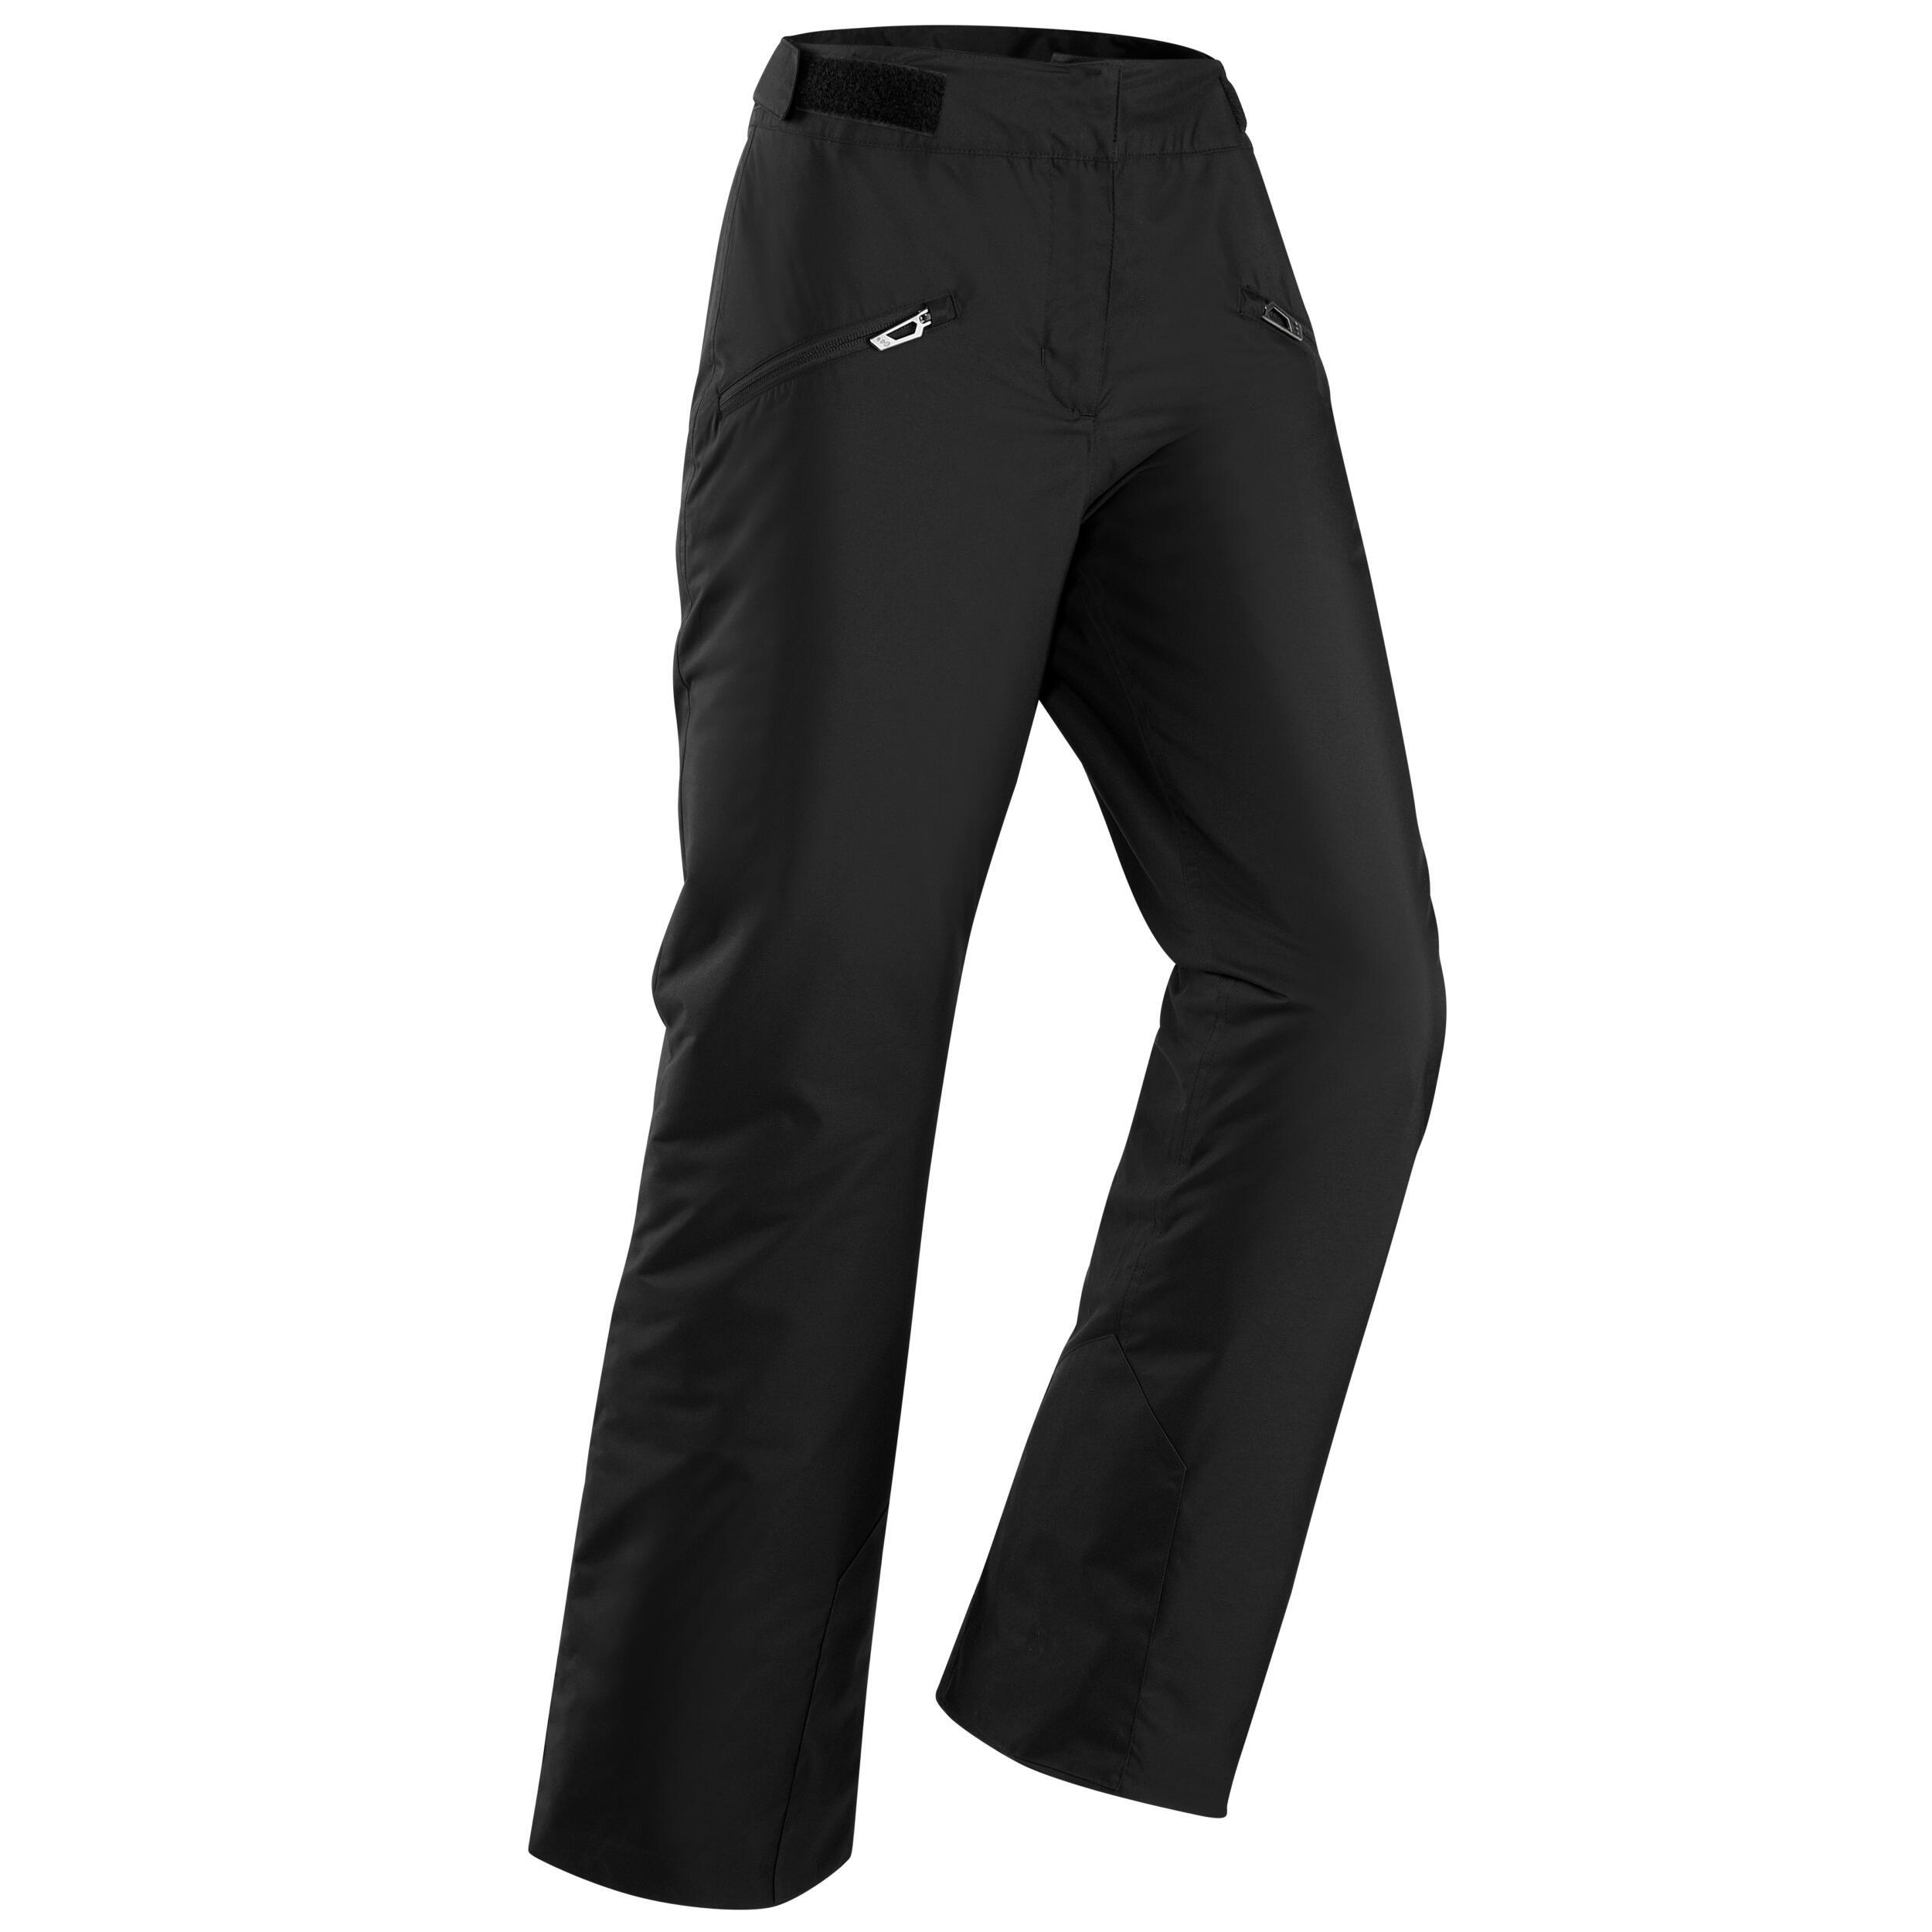 WEDZE Women’s Ski Trousers - Black